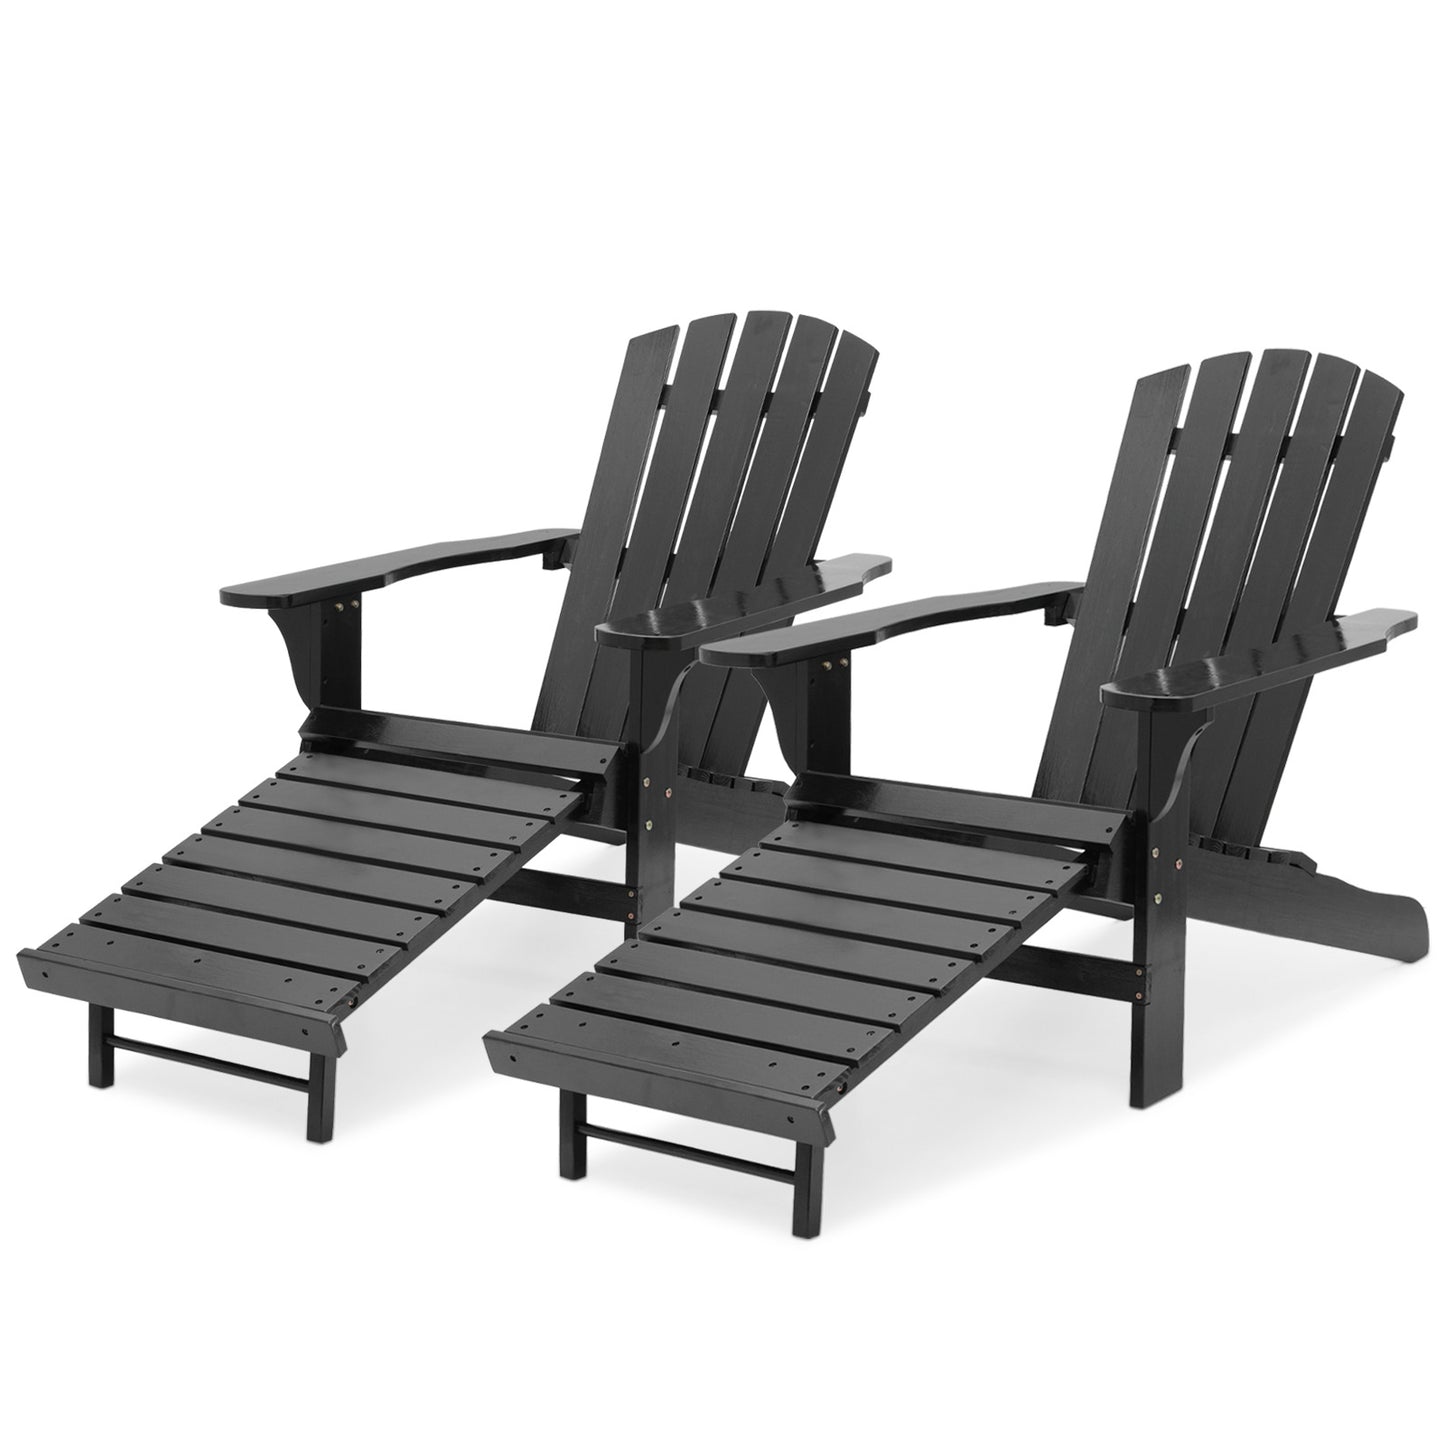 Set of 2 Adirondack Chair - Retractable Footrest